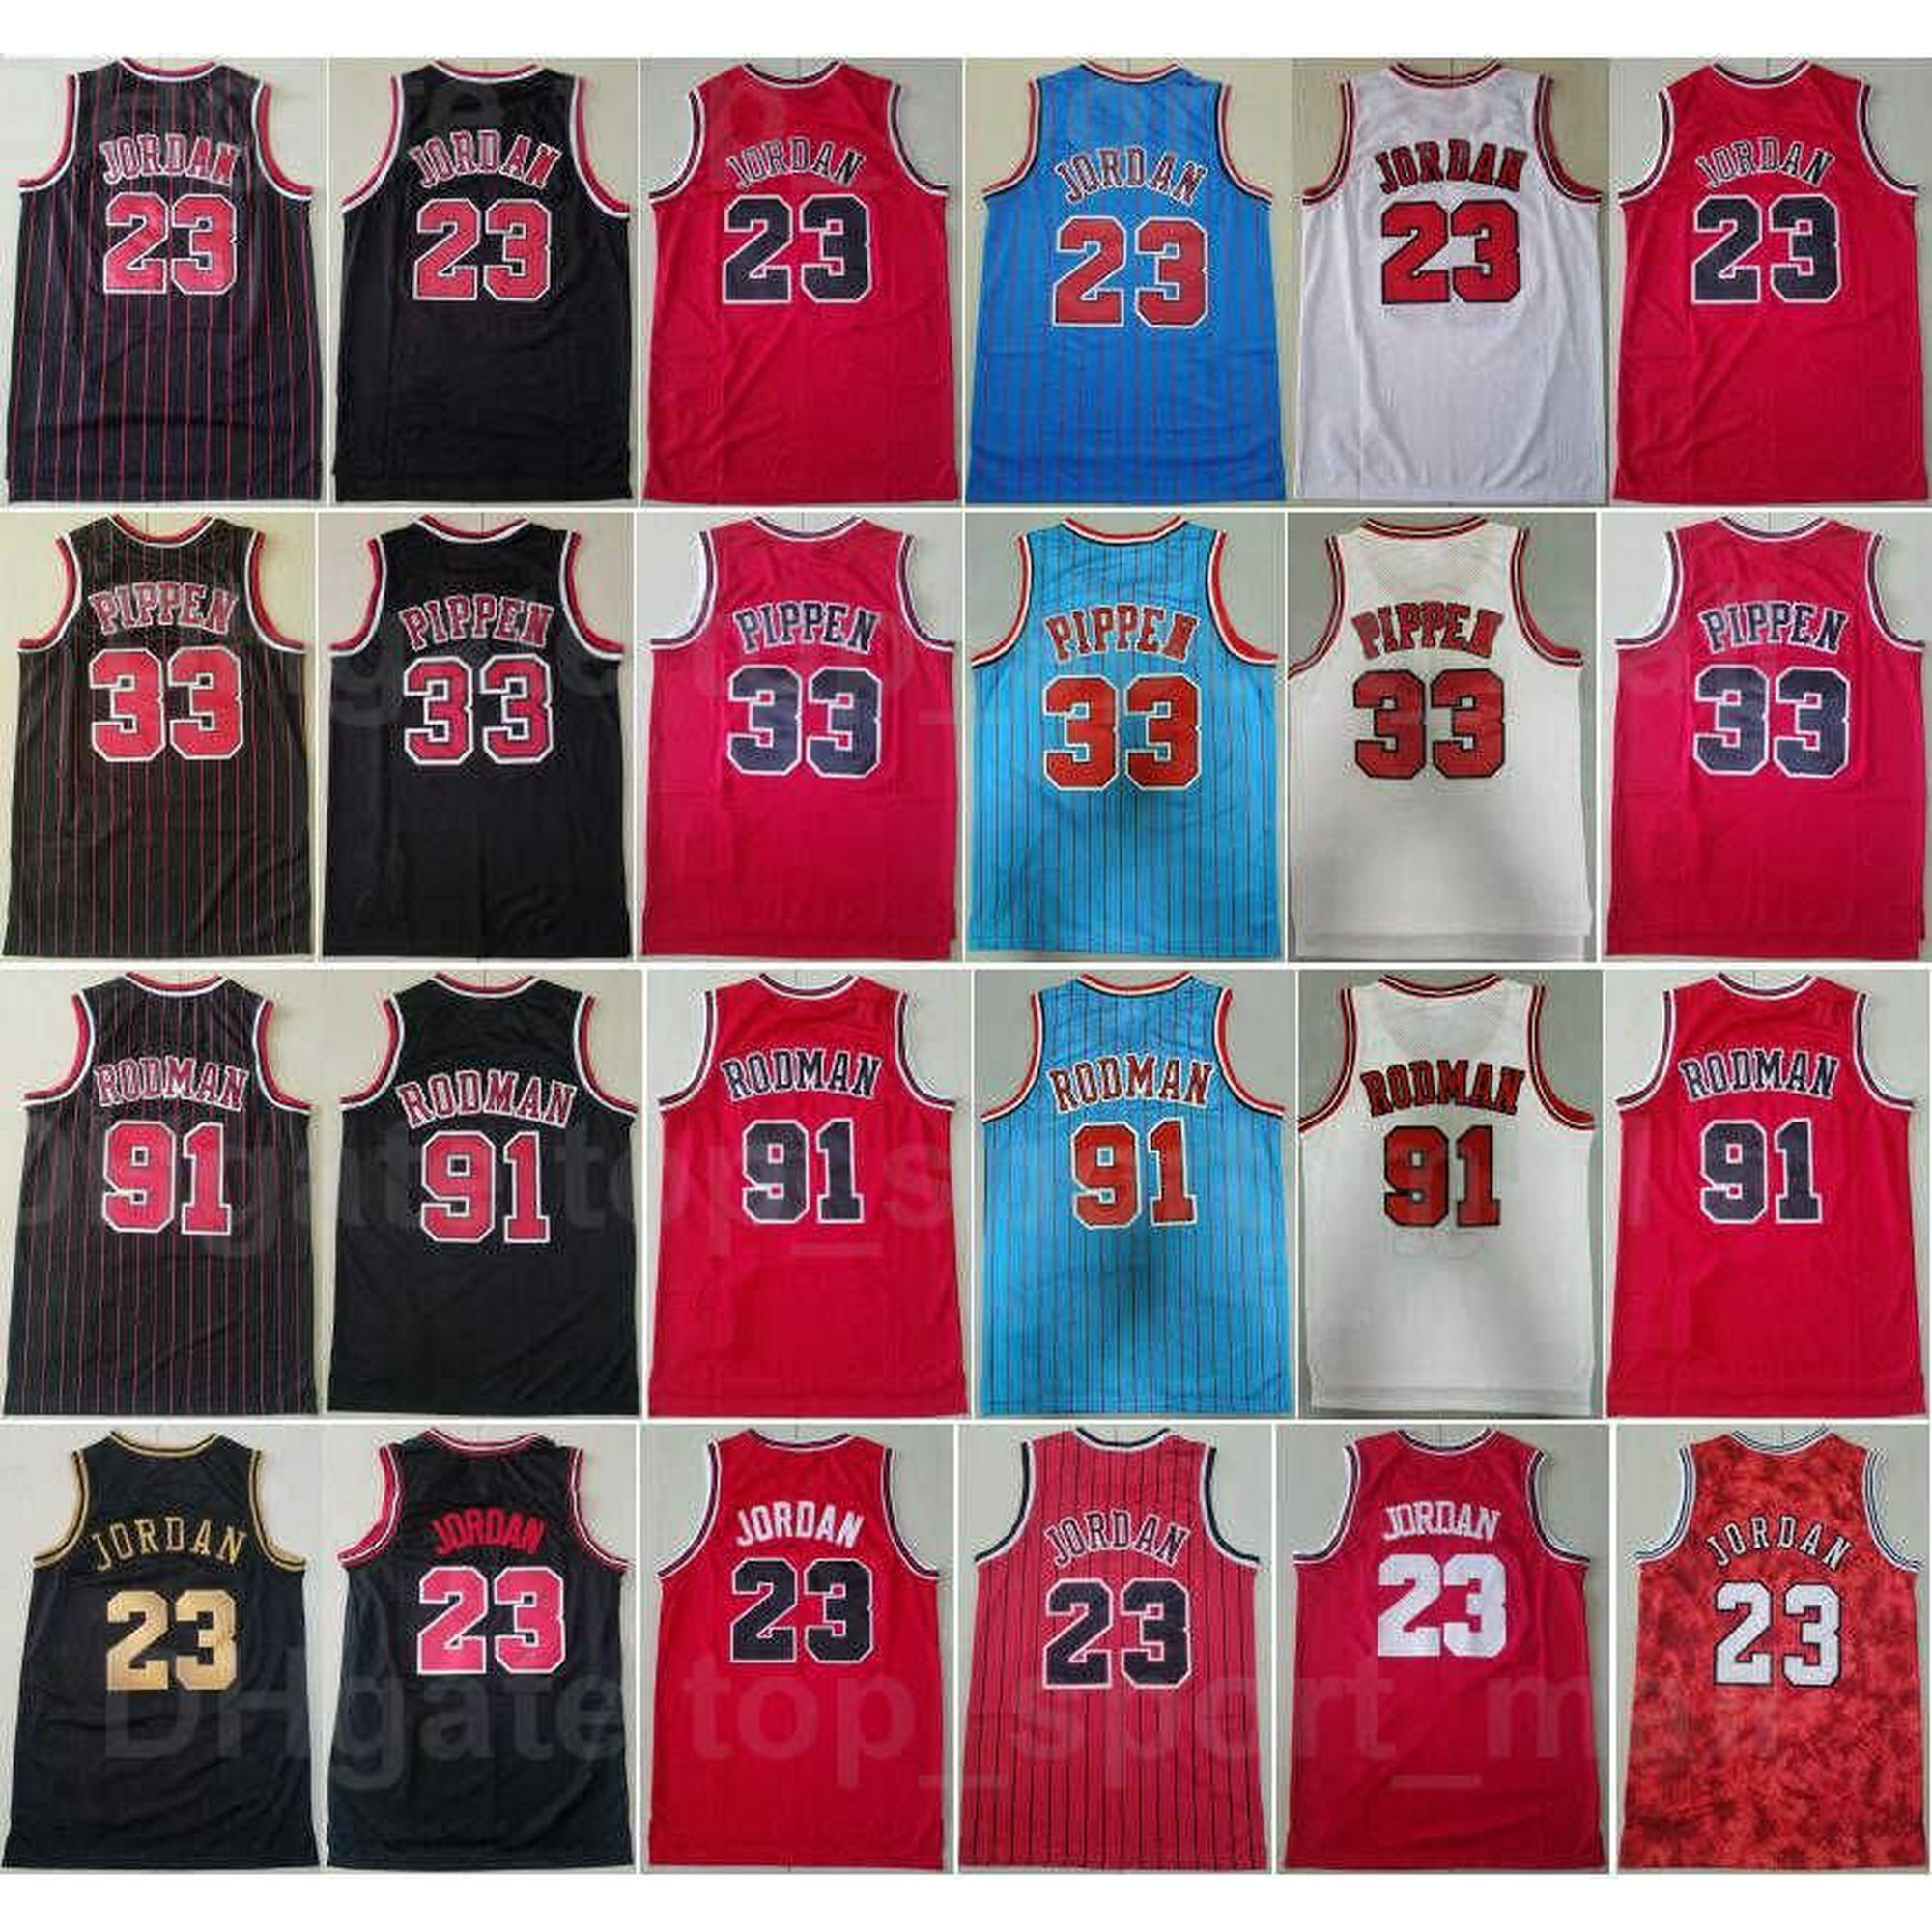  Mitchell & Ness Chicago Bulls Scottie Pippen 33 Red